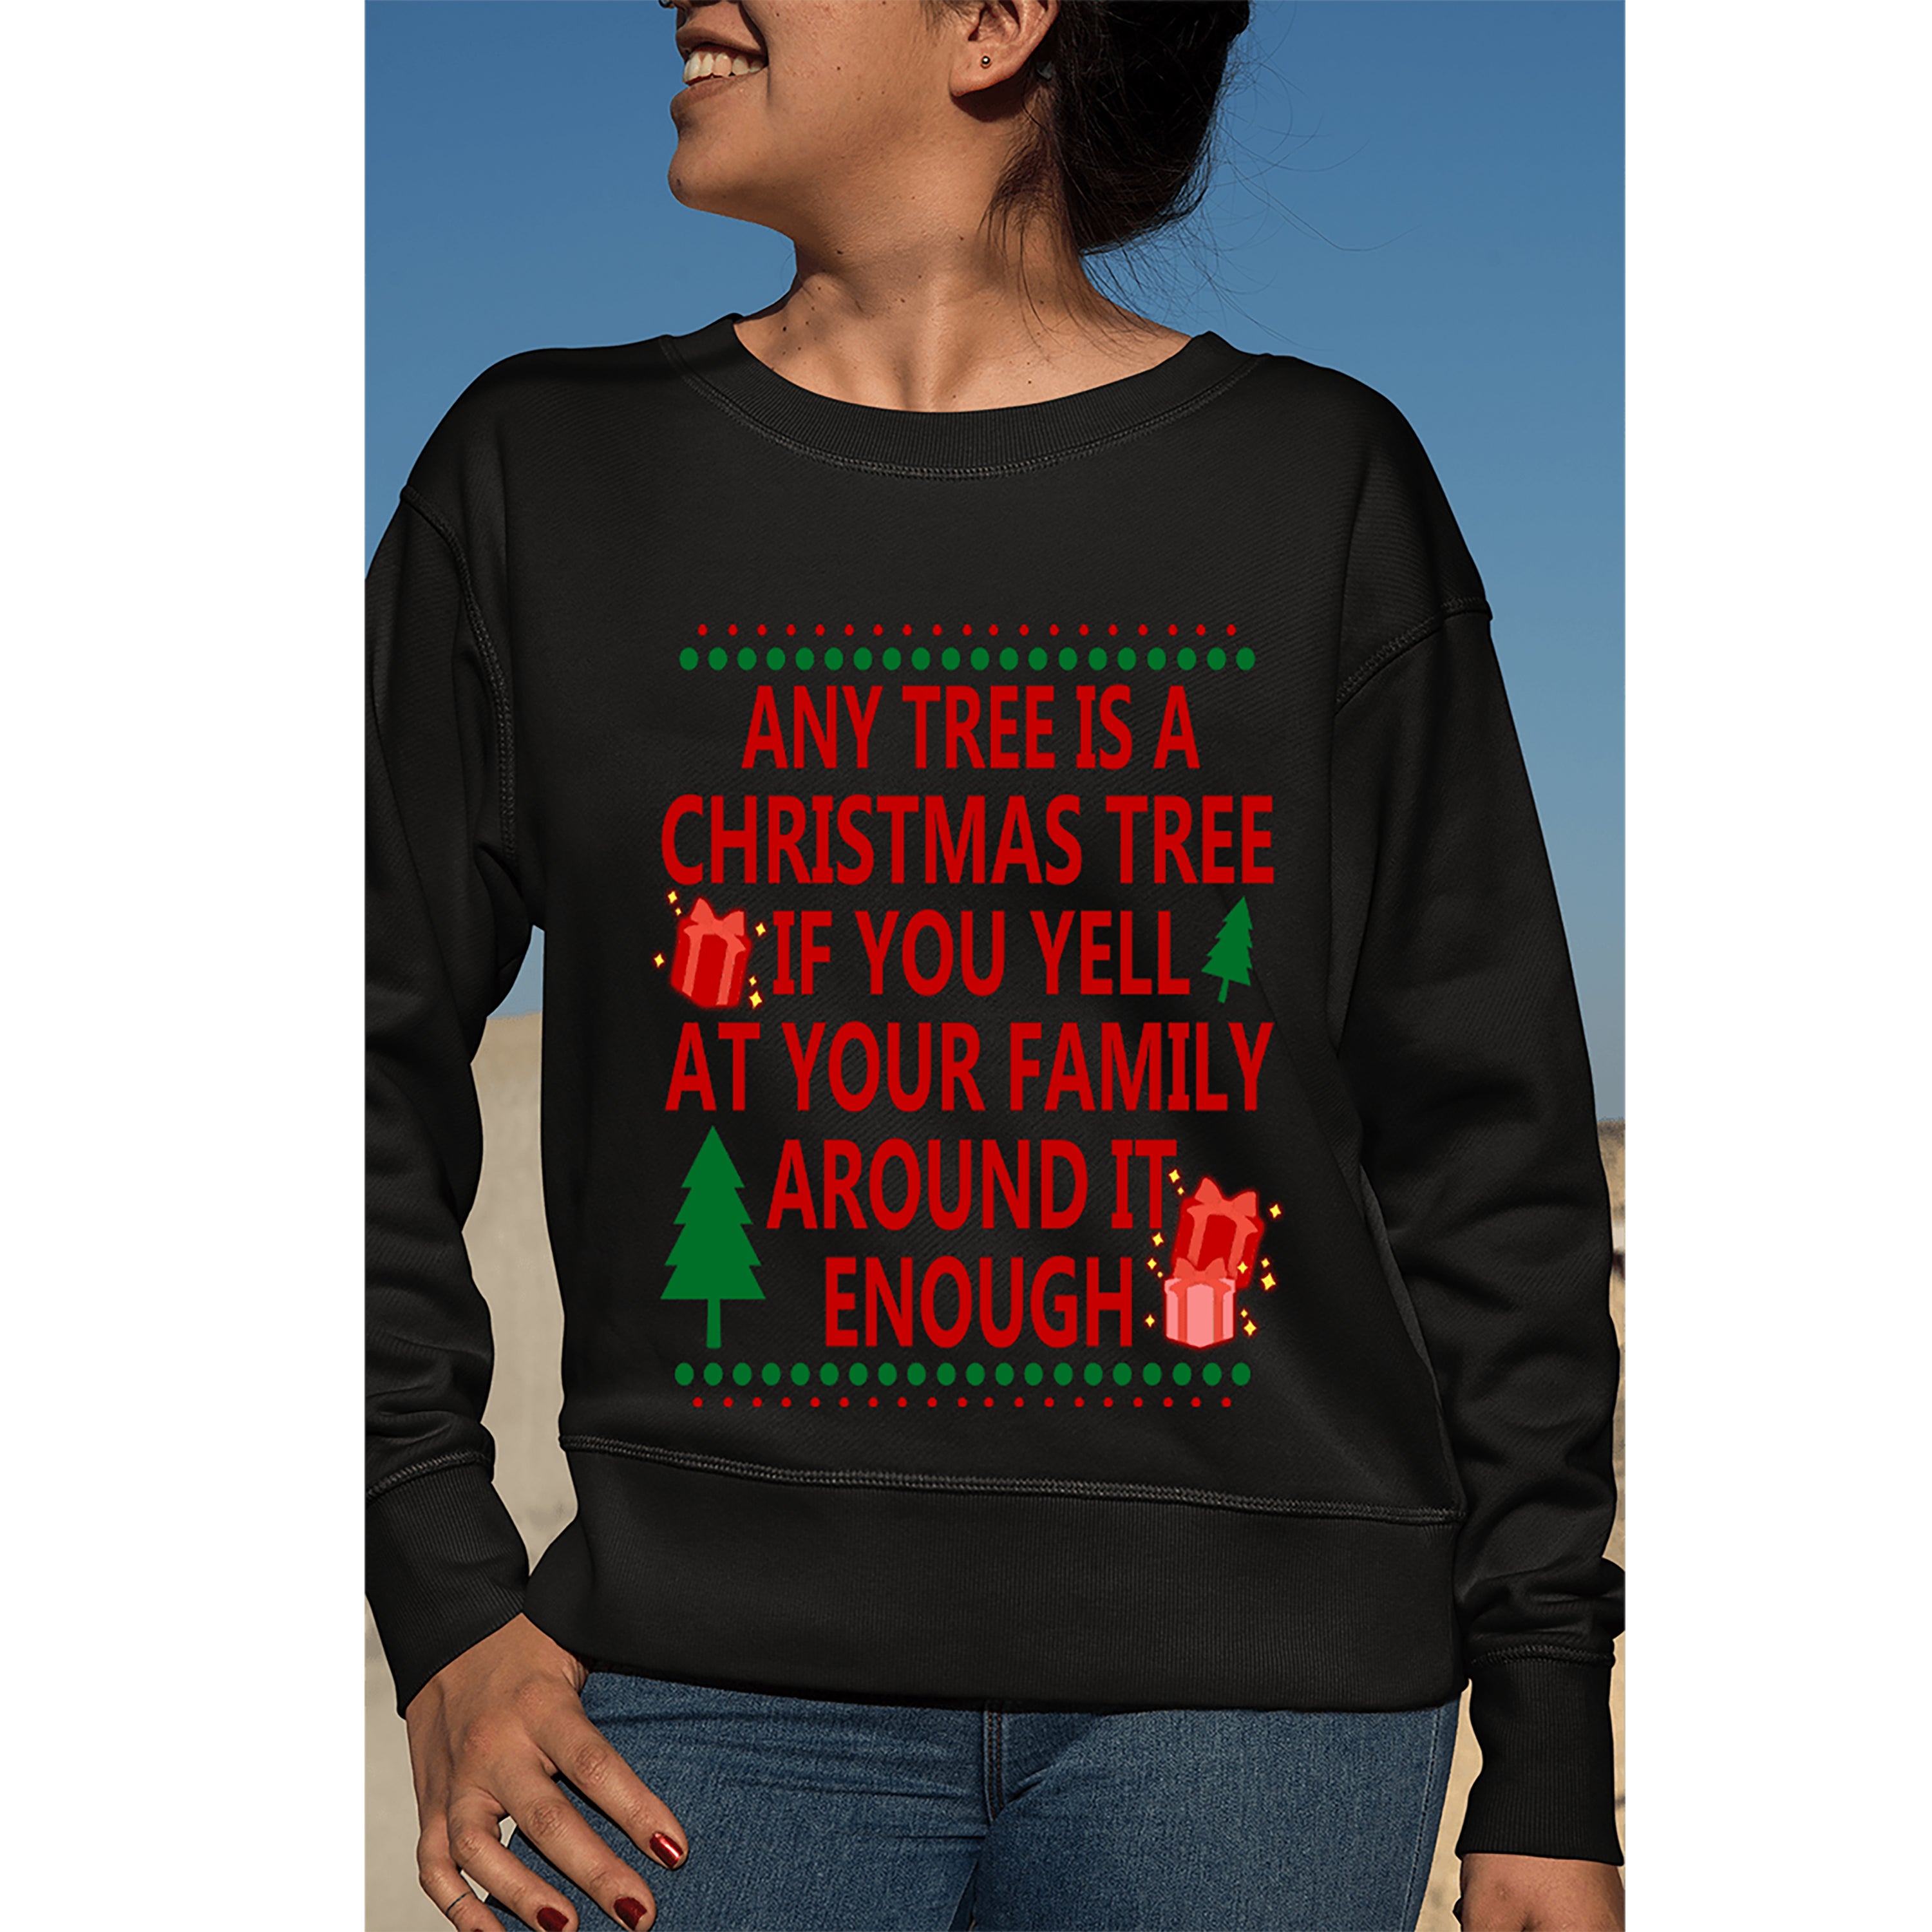 "ANY TREE IS A CHRISTMAS TREE"- Hoodie & Sweatshirt.